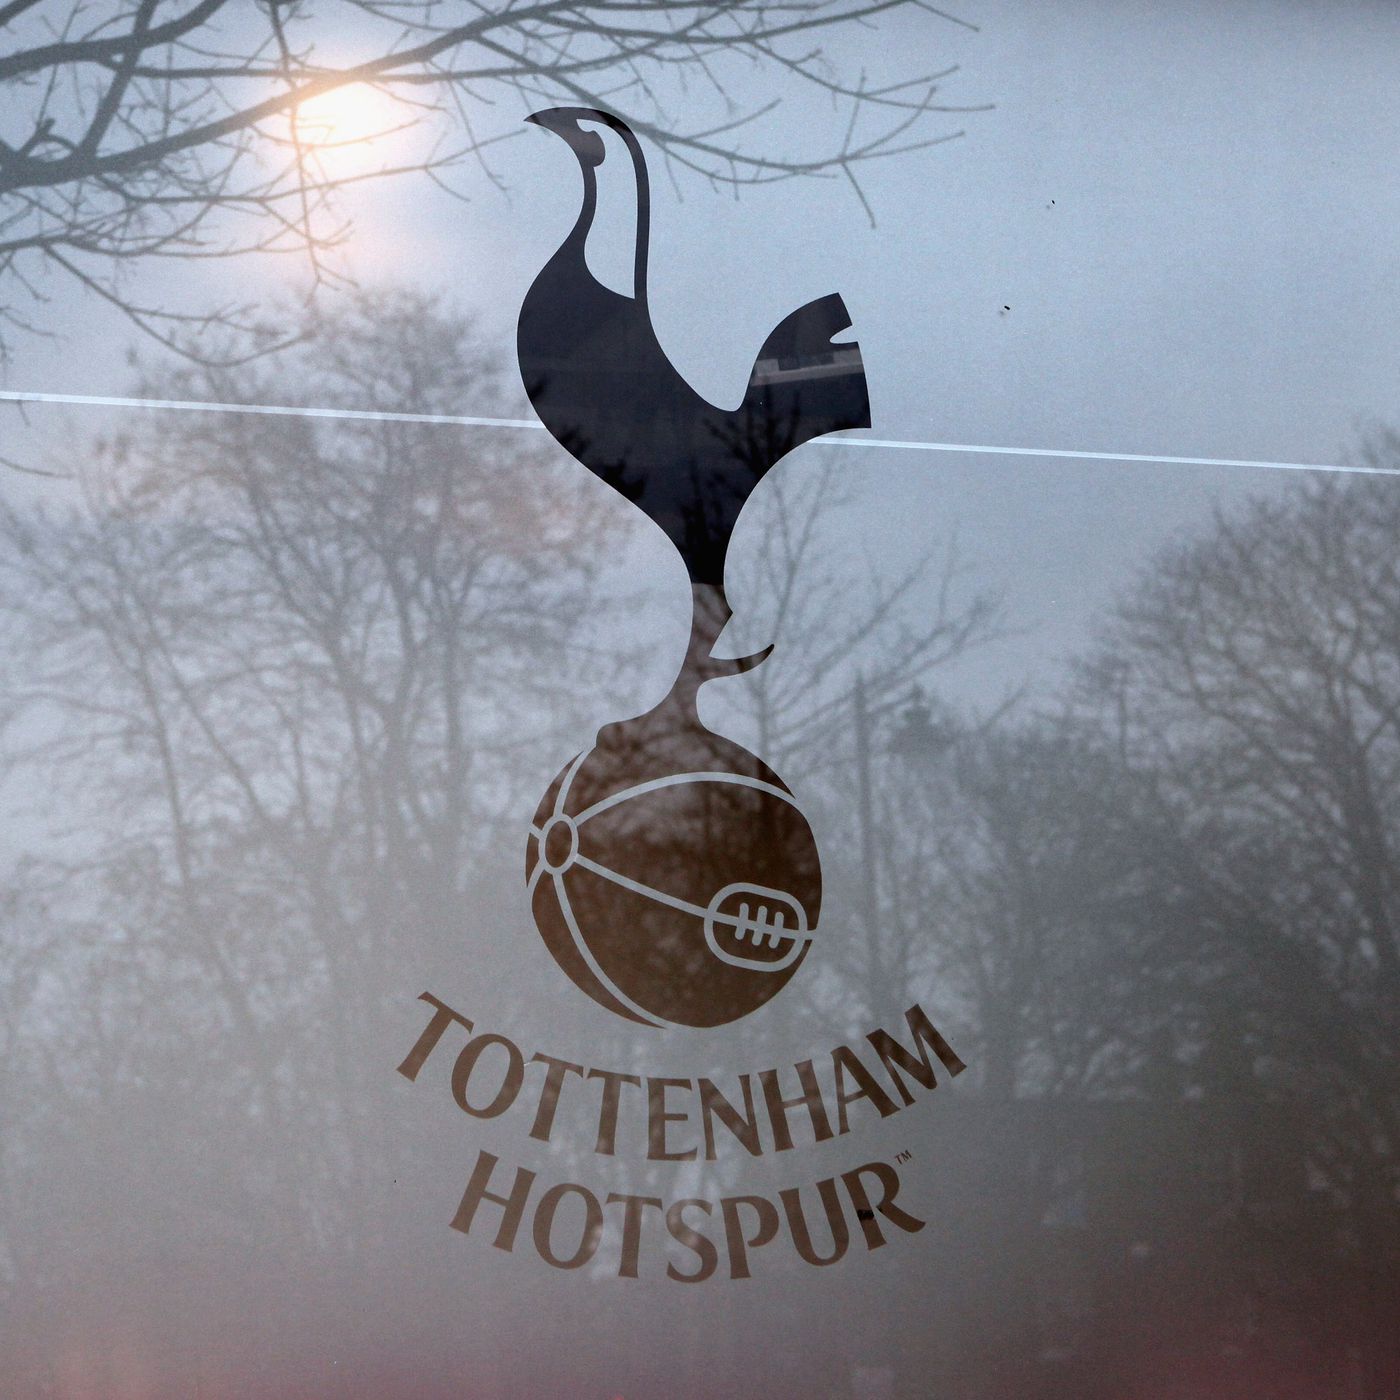 Tottenham sign lucrative Nike kit contract - Sports247